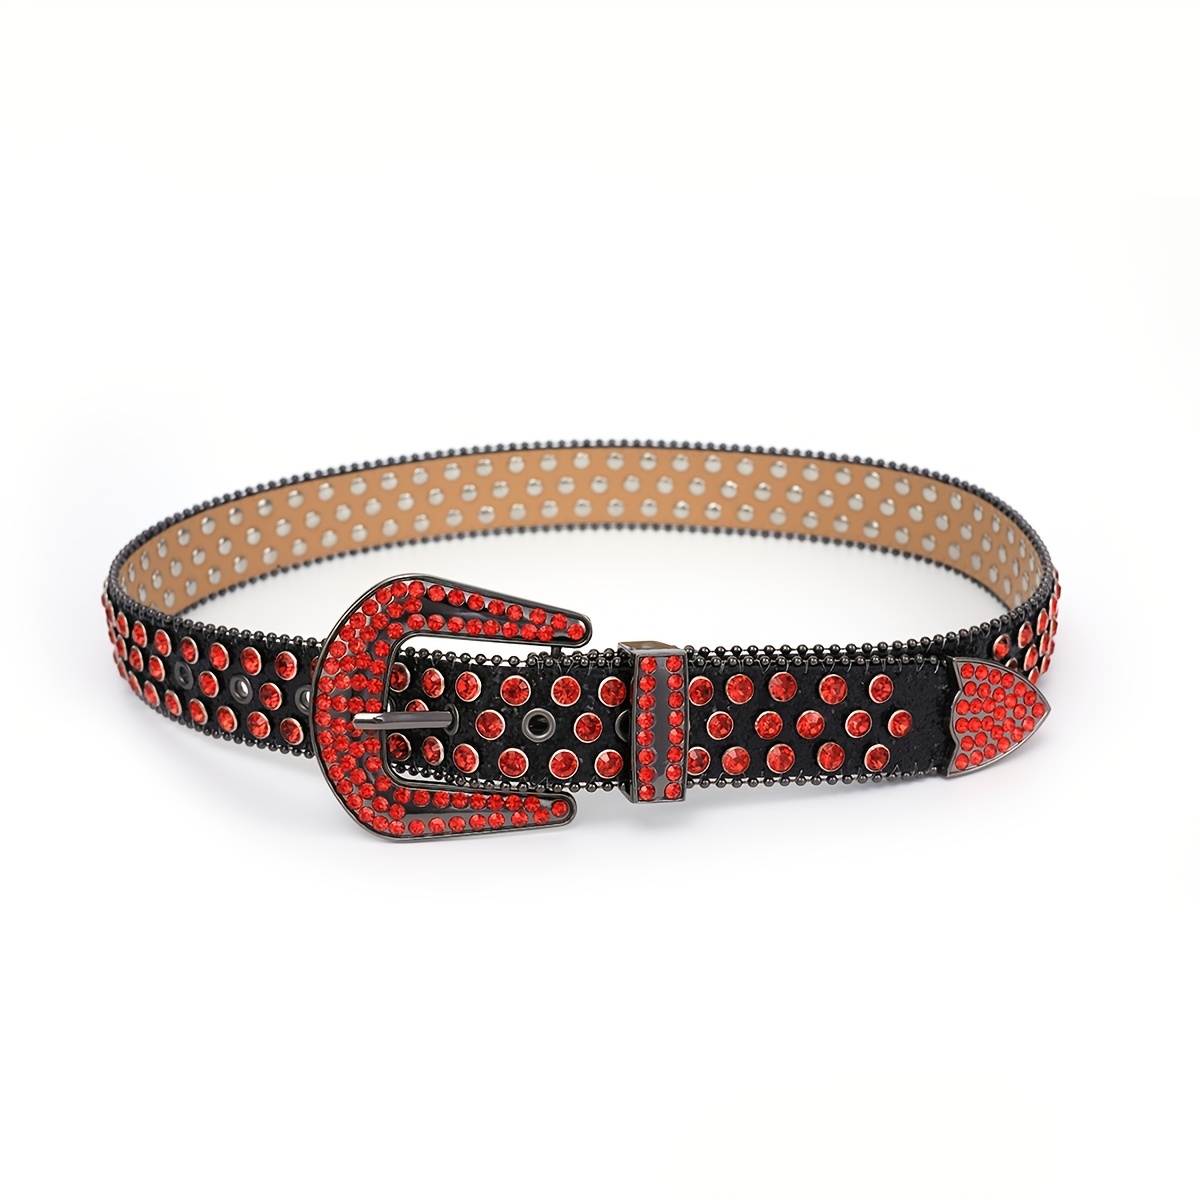 Rhinestone Belt for Women Cowgirl Bling Studded Leather Belt for